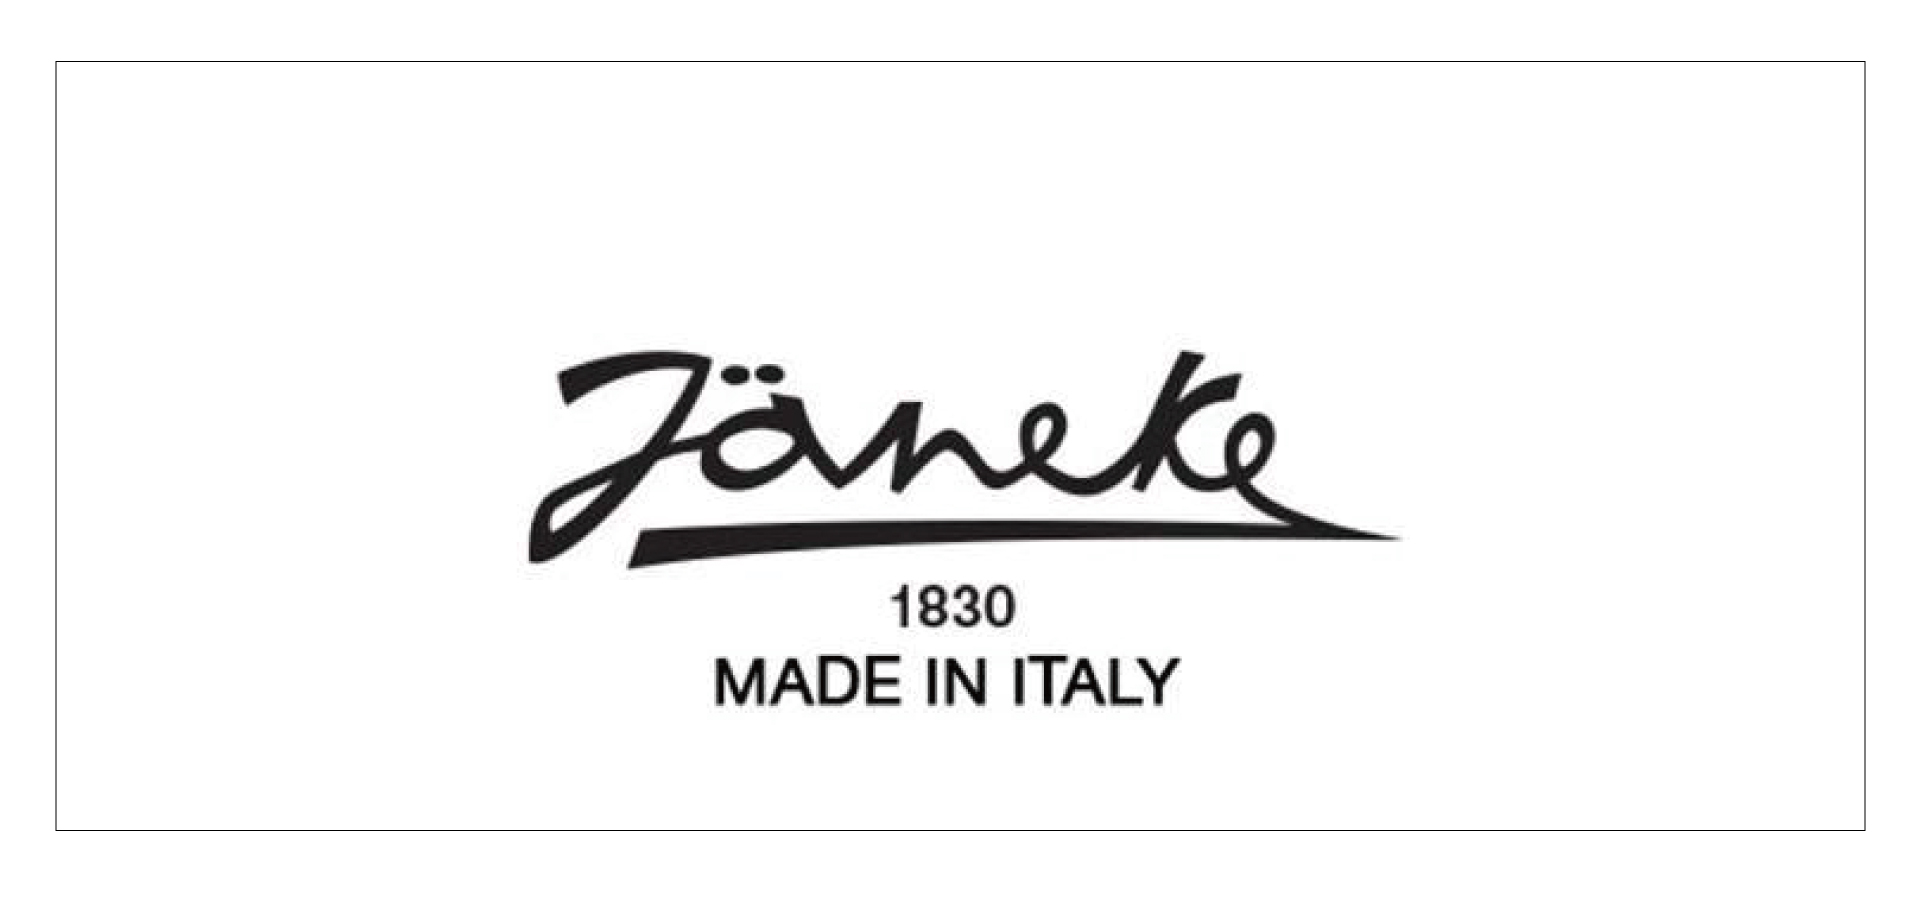 Jäneke  Made in italy  ヤネケ